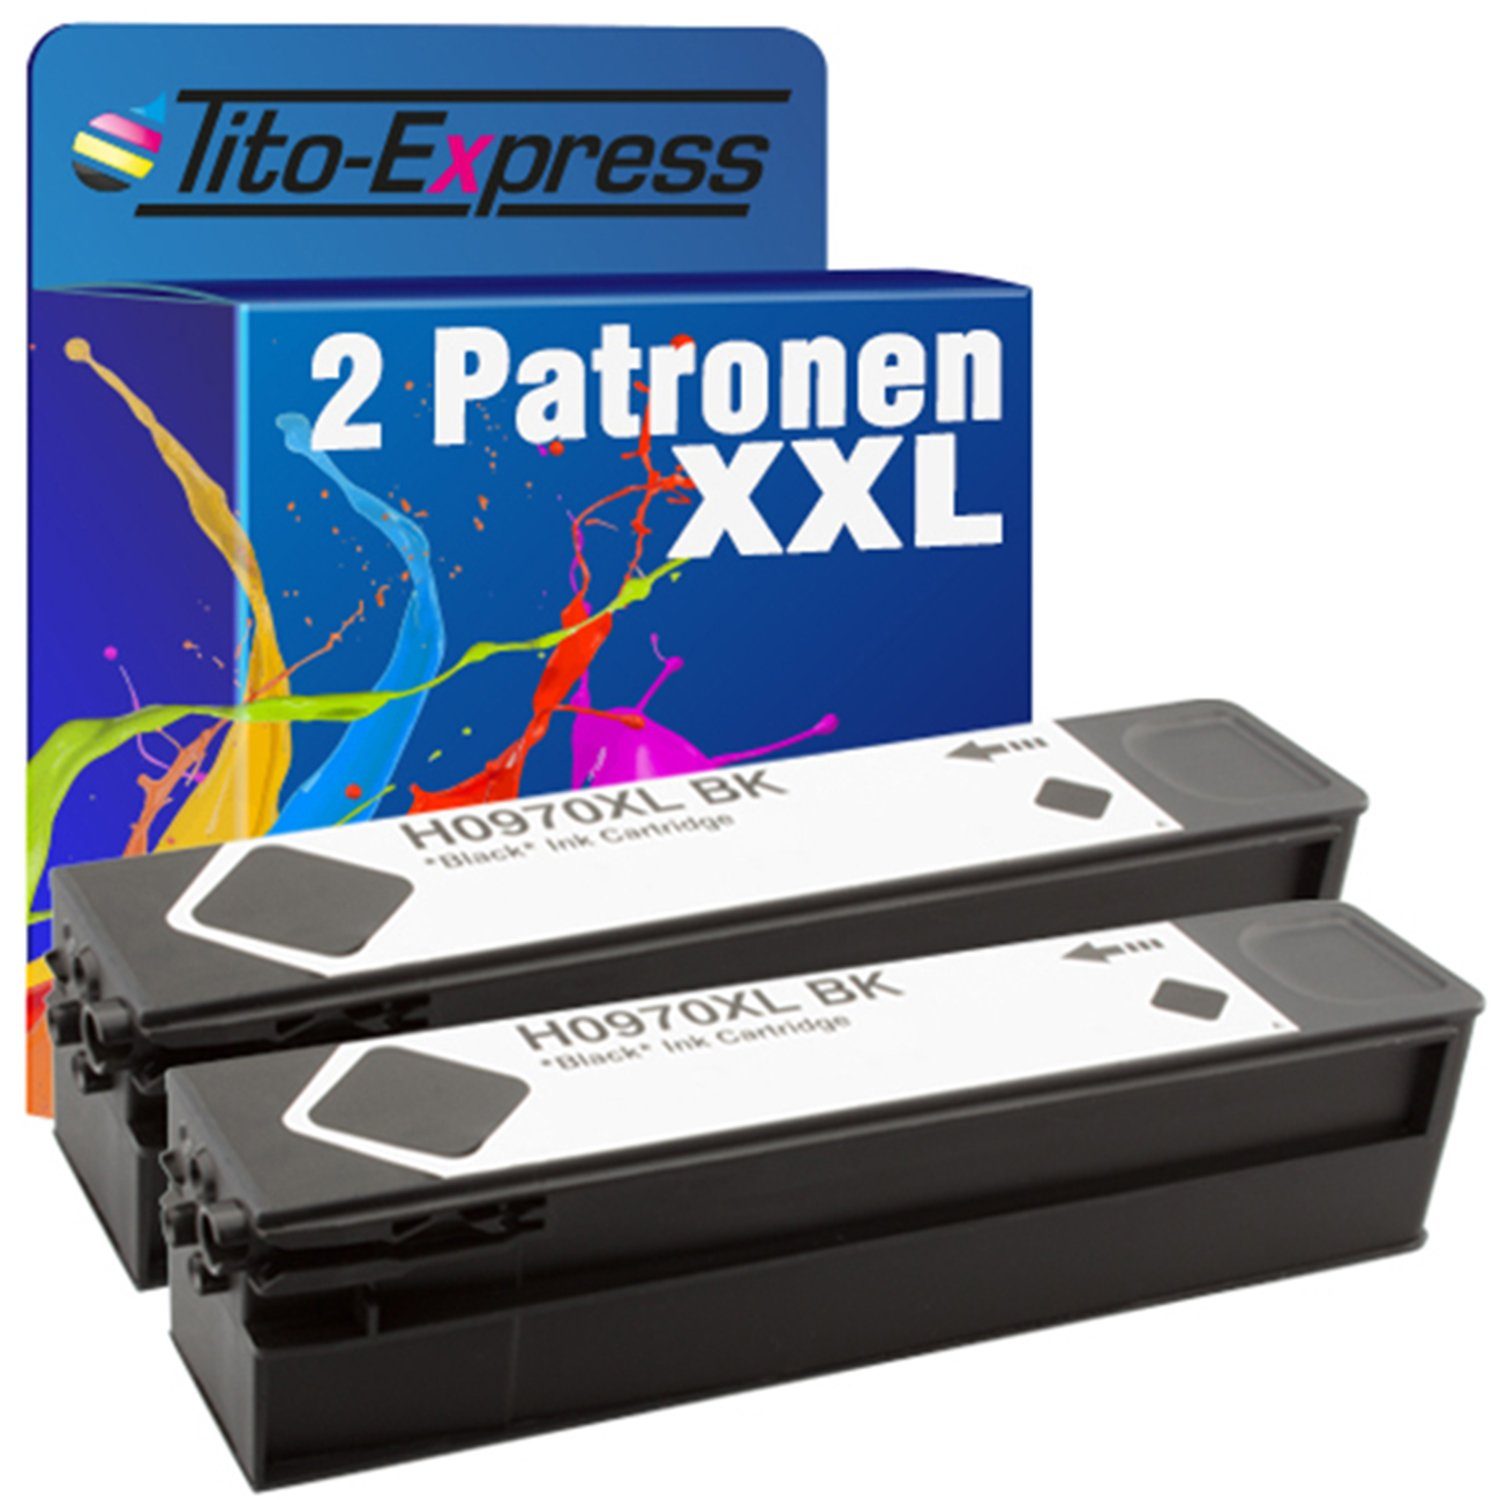 Pro XL (Doppelpack, MFP MFP X551dw 970 Set 2er X476dn Black 970XL HP X451dn X476dw Officejet Tintenpatrone für ersetzt X451dw X576dw) Tito-Express